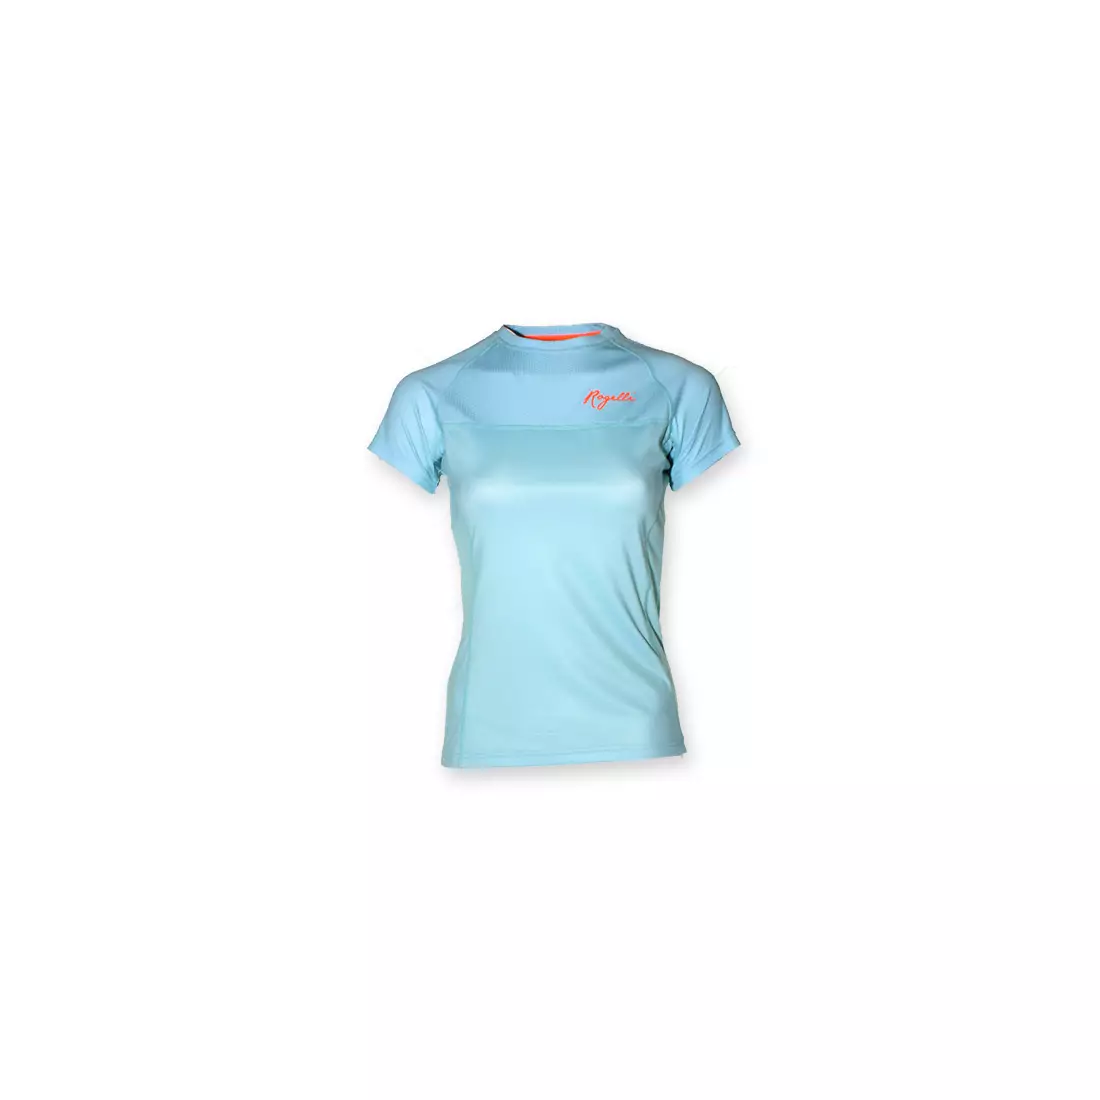 ROGELLI RUN SIRA - női futópóló - szín: kék